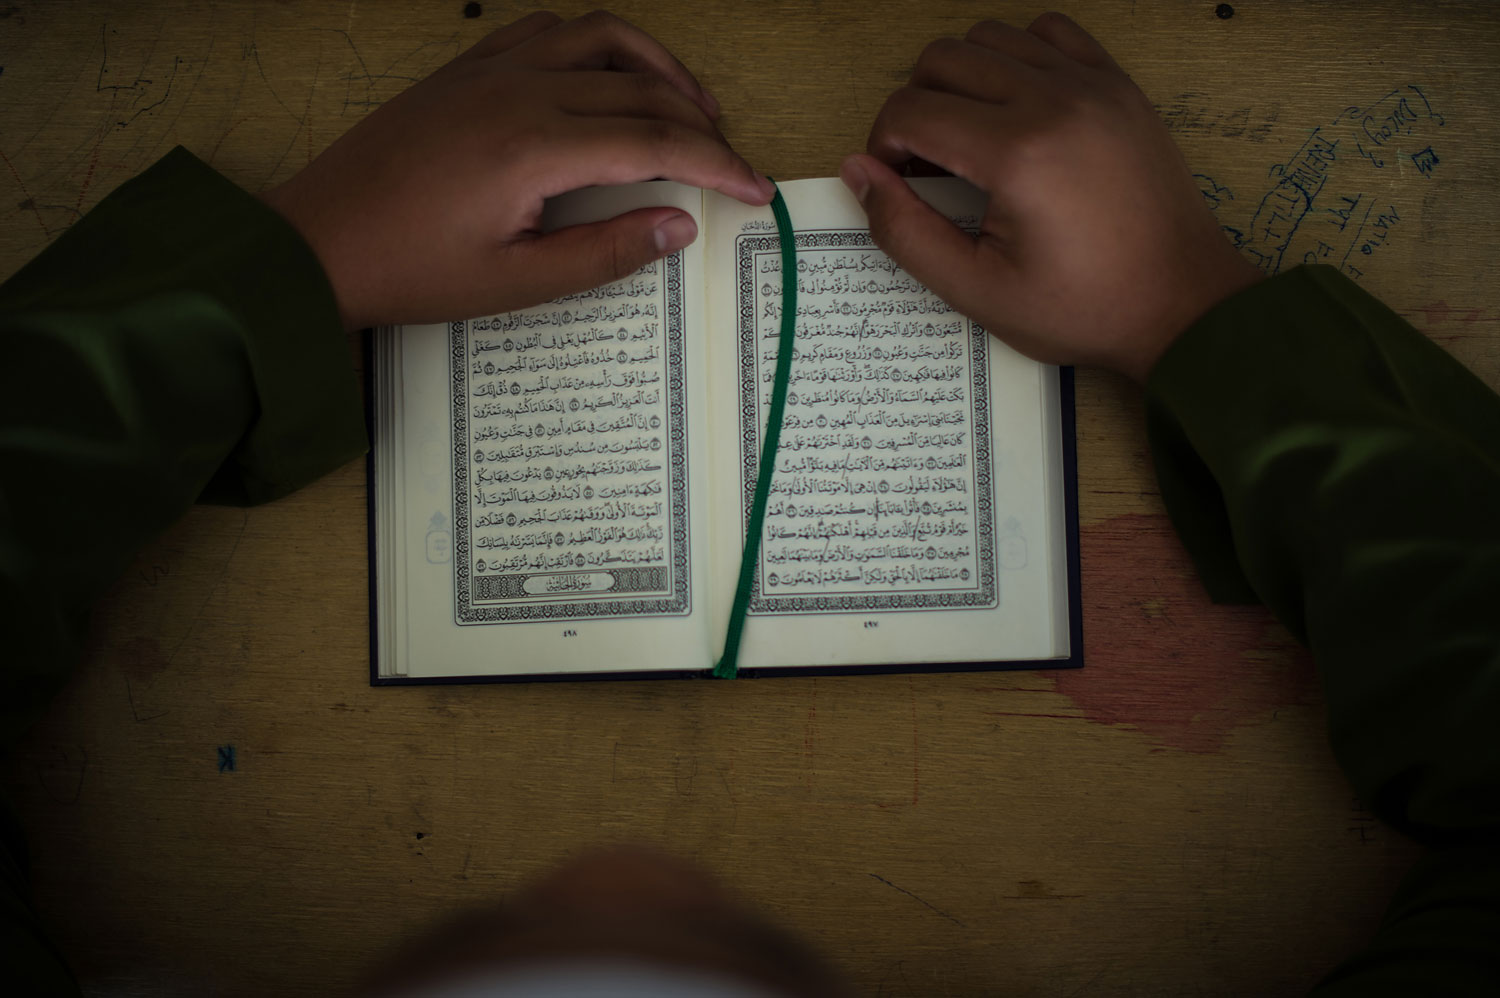 A Muslim boy reads the Koran during the month of Ramadan, Kuala Lumpur, July 30, 2013. (Mohd Rasfan—AFP/Getty Images)